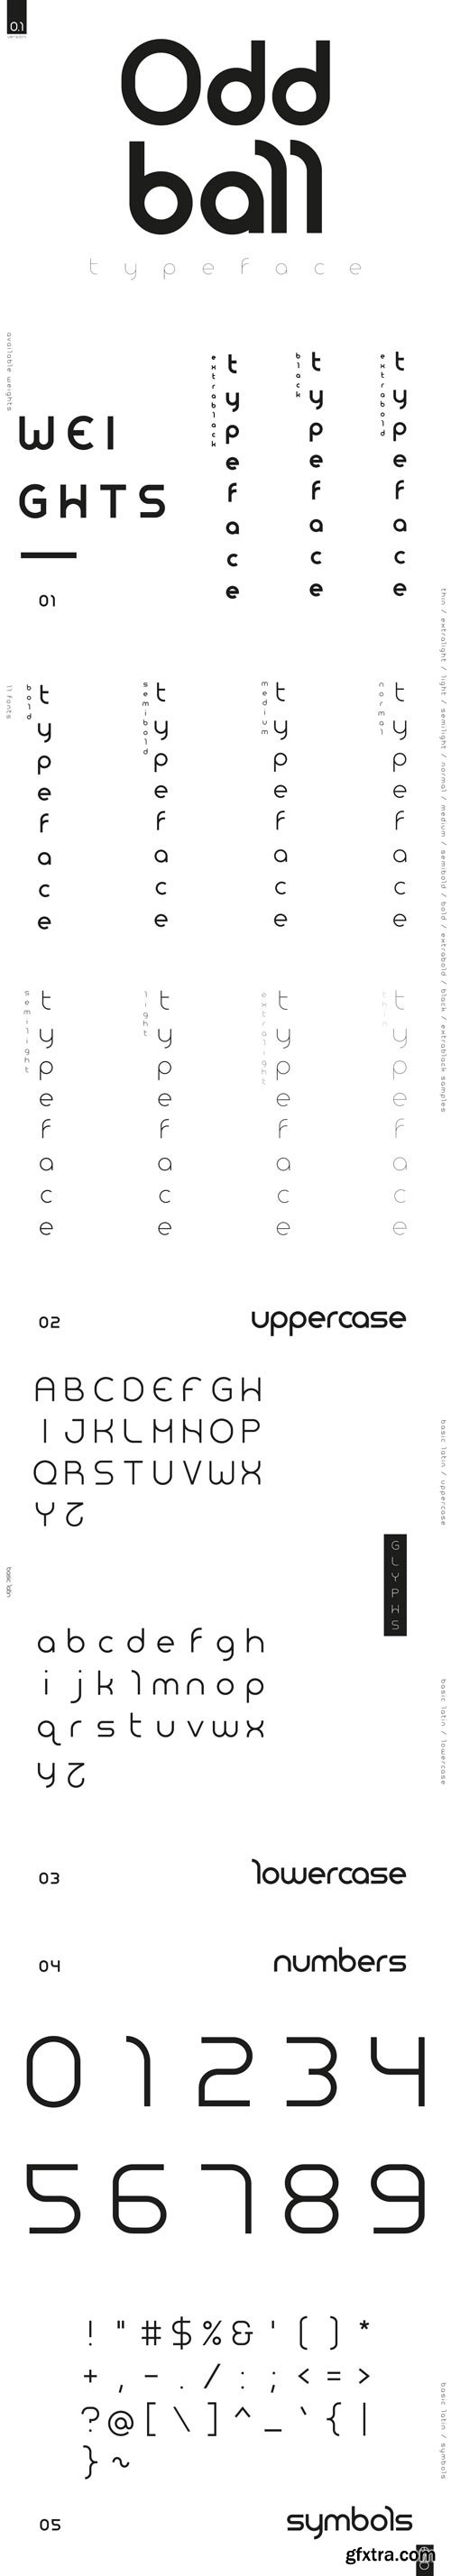 Oddball Typeface - Font